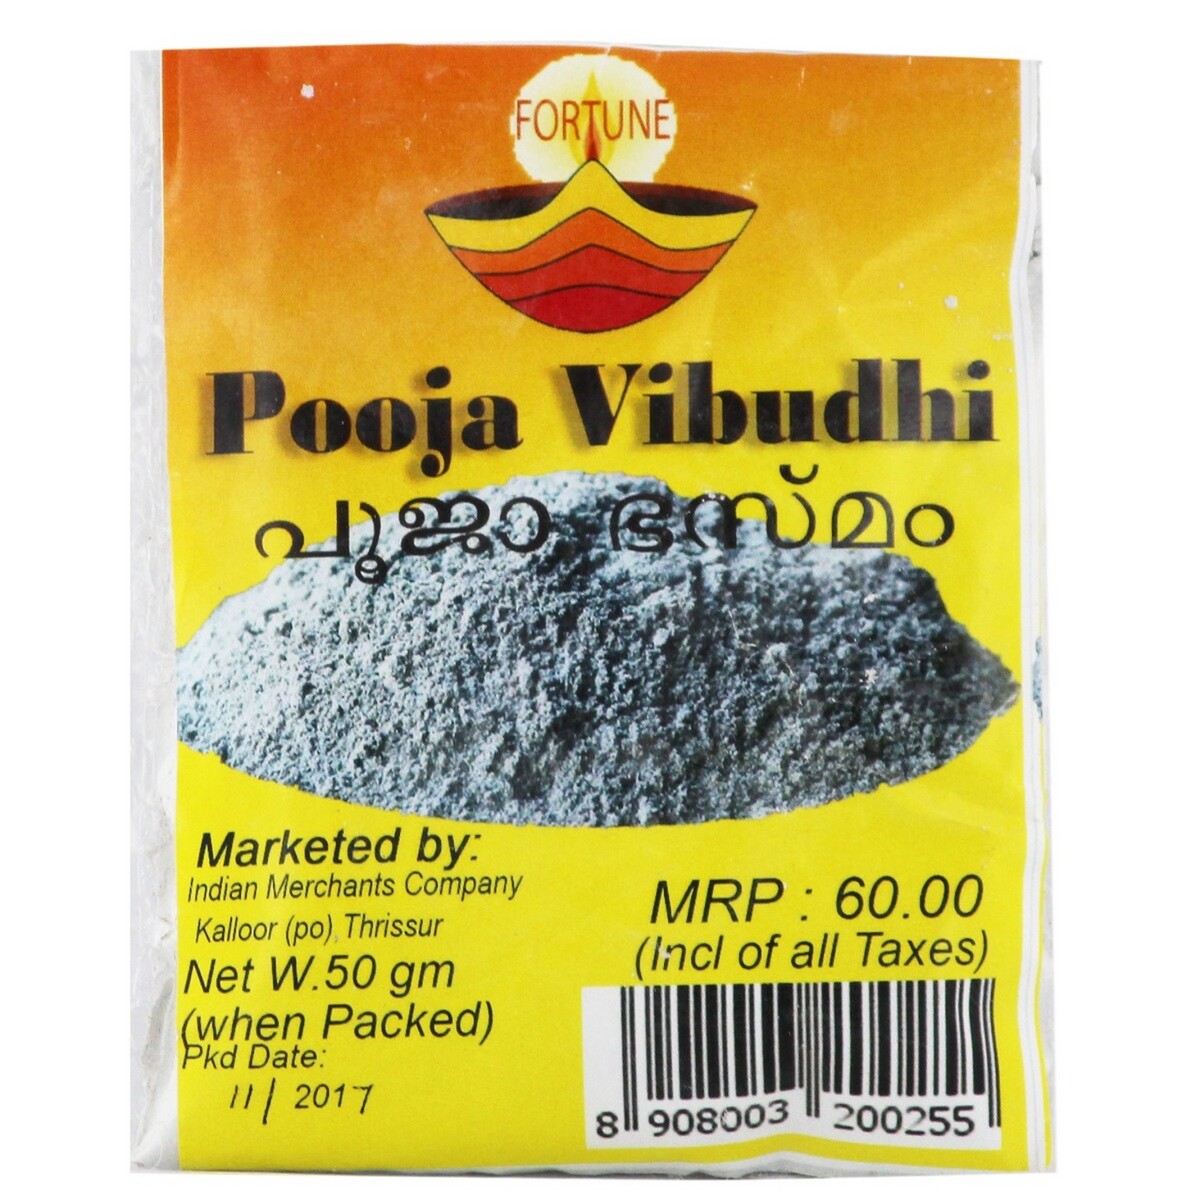 Fortune Pooja Vibudhi Powder 50g